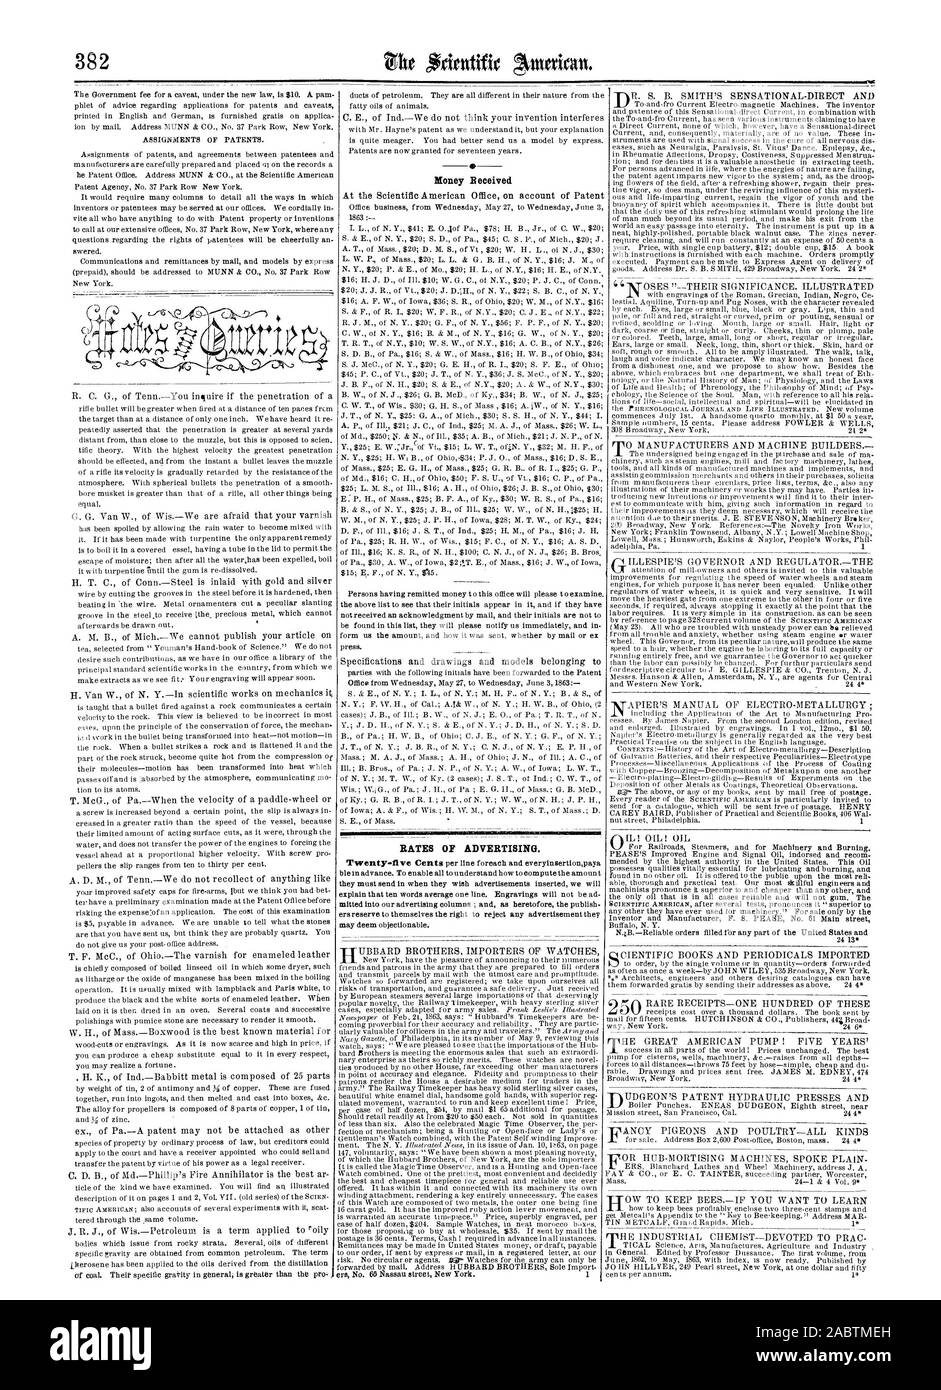 Scientific American, 1863-06-13 Foto de stock